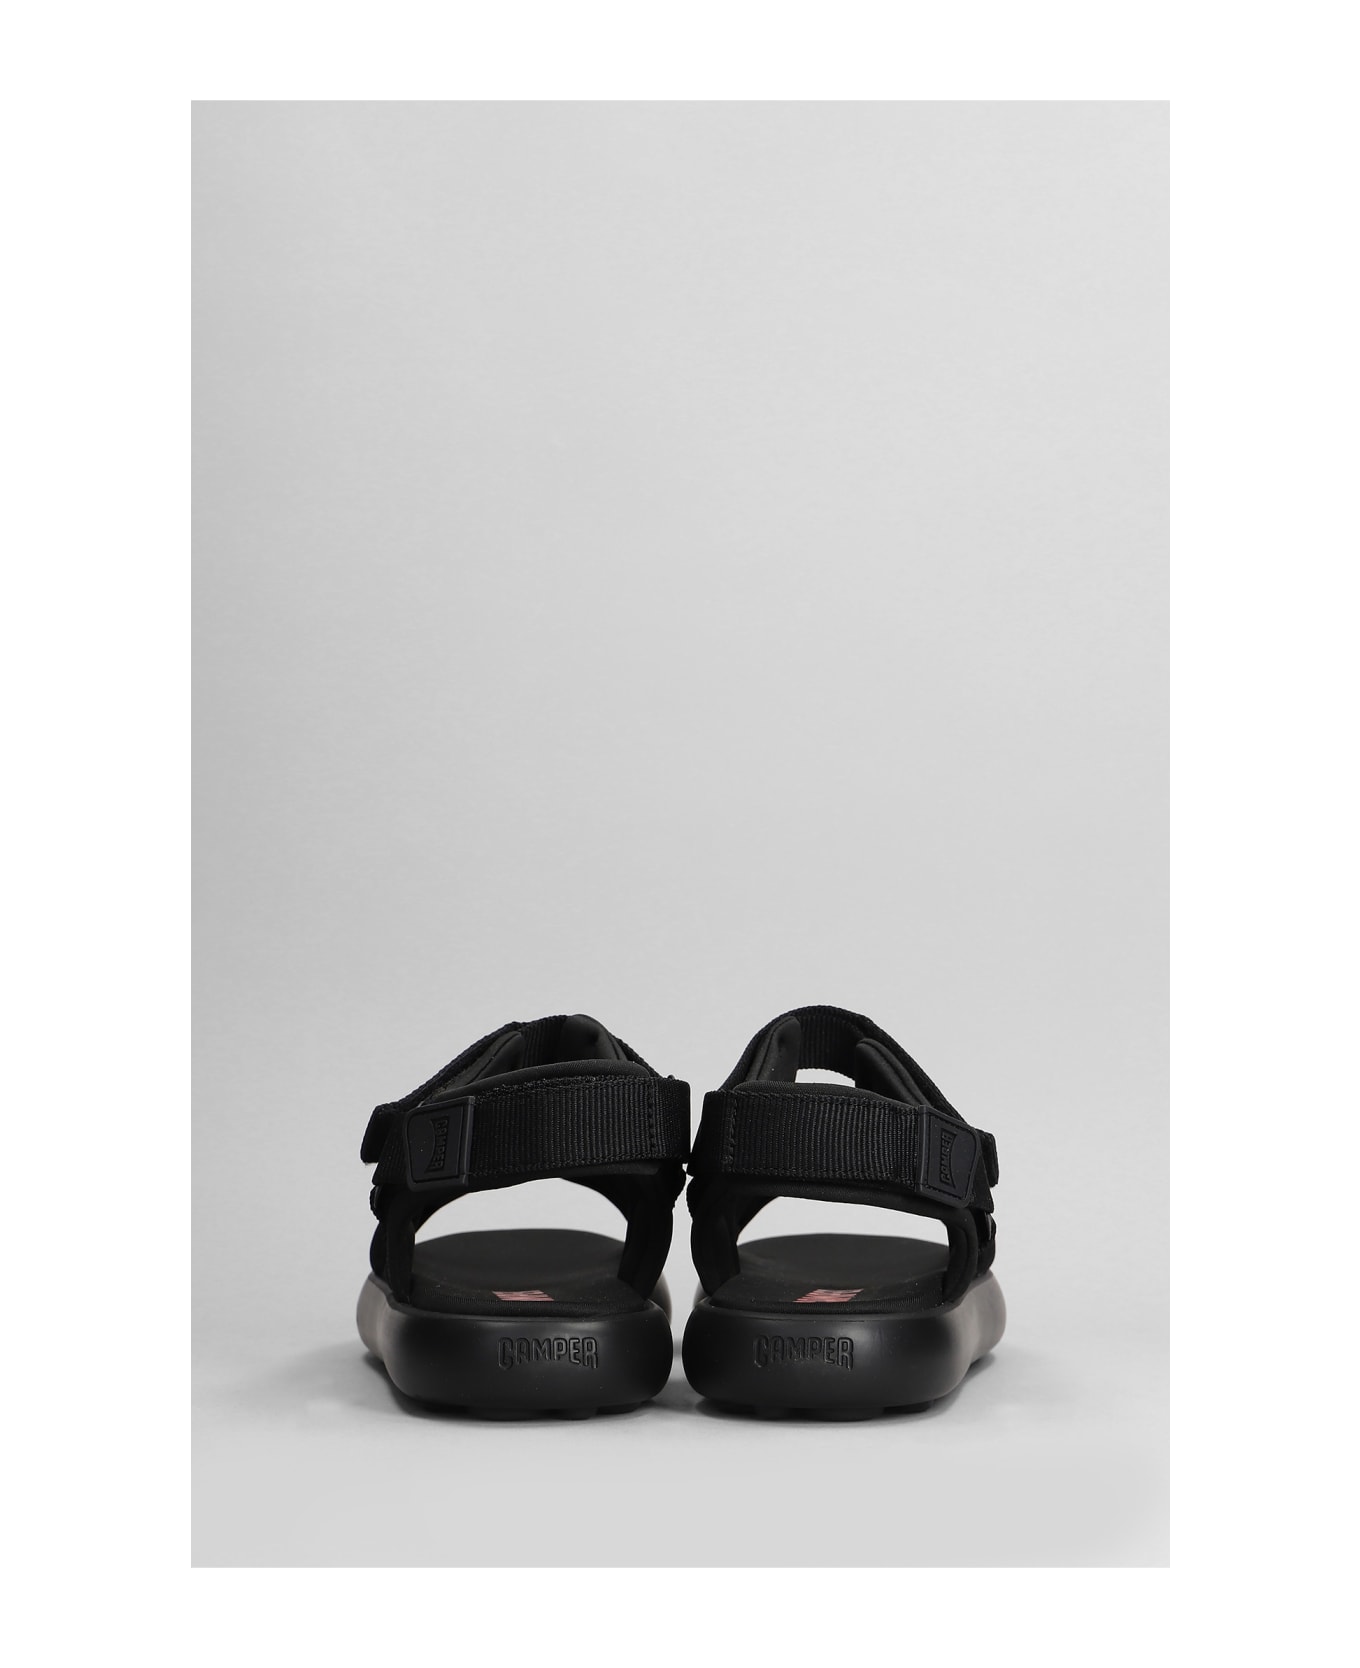 Camper Flota Sandals In Black Fabric - Black